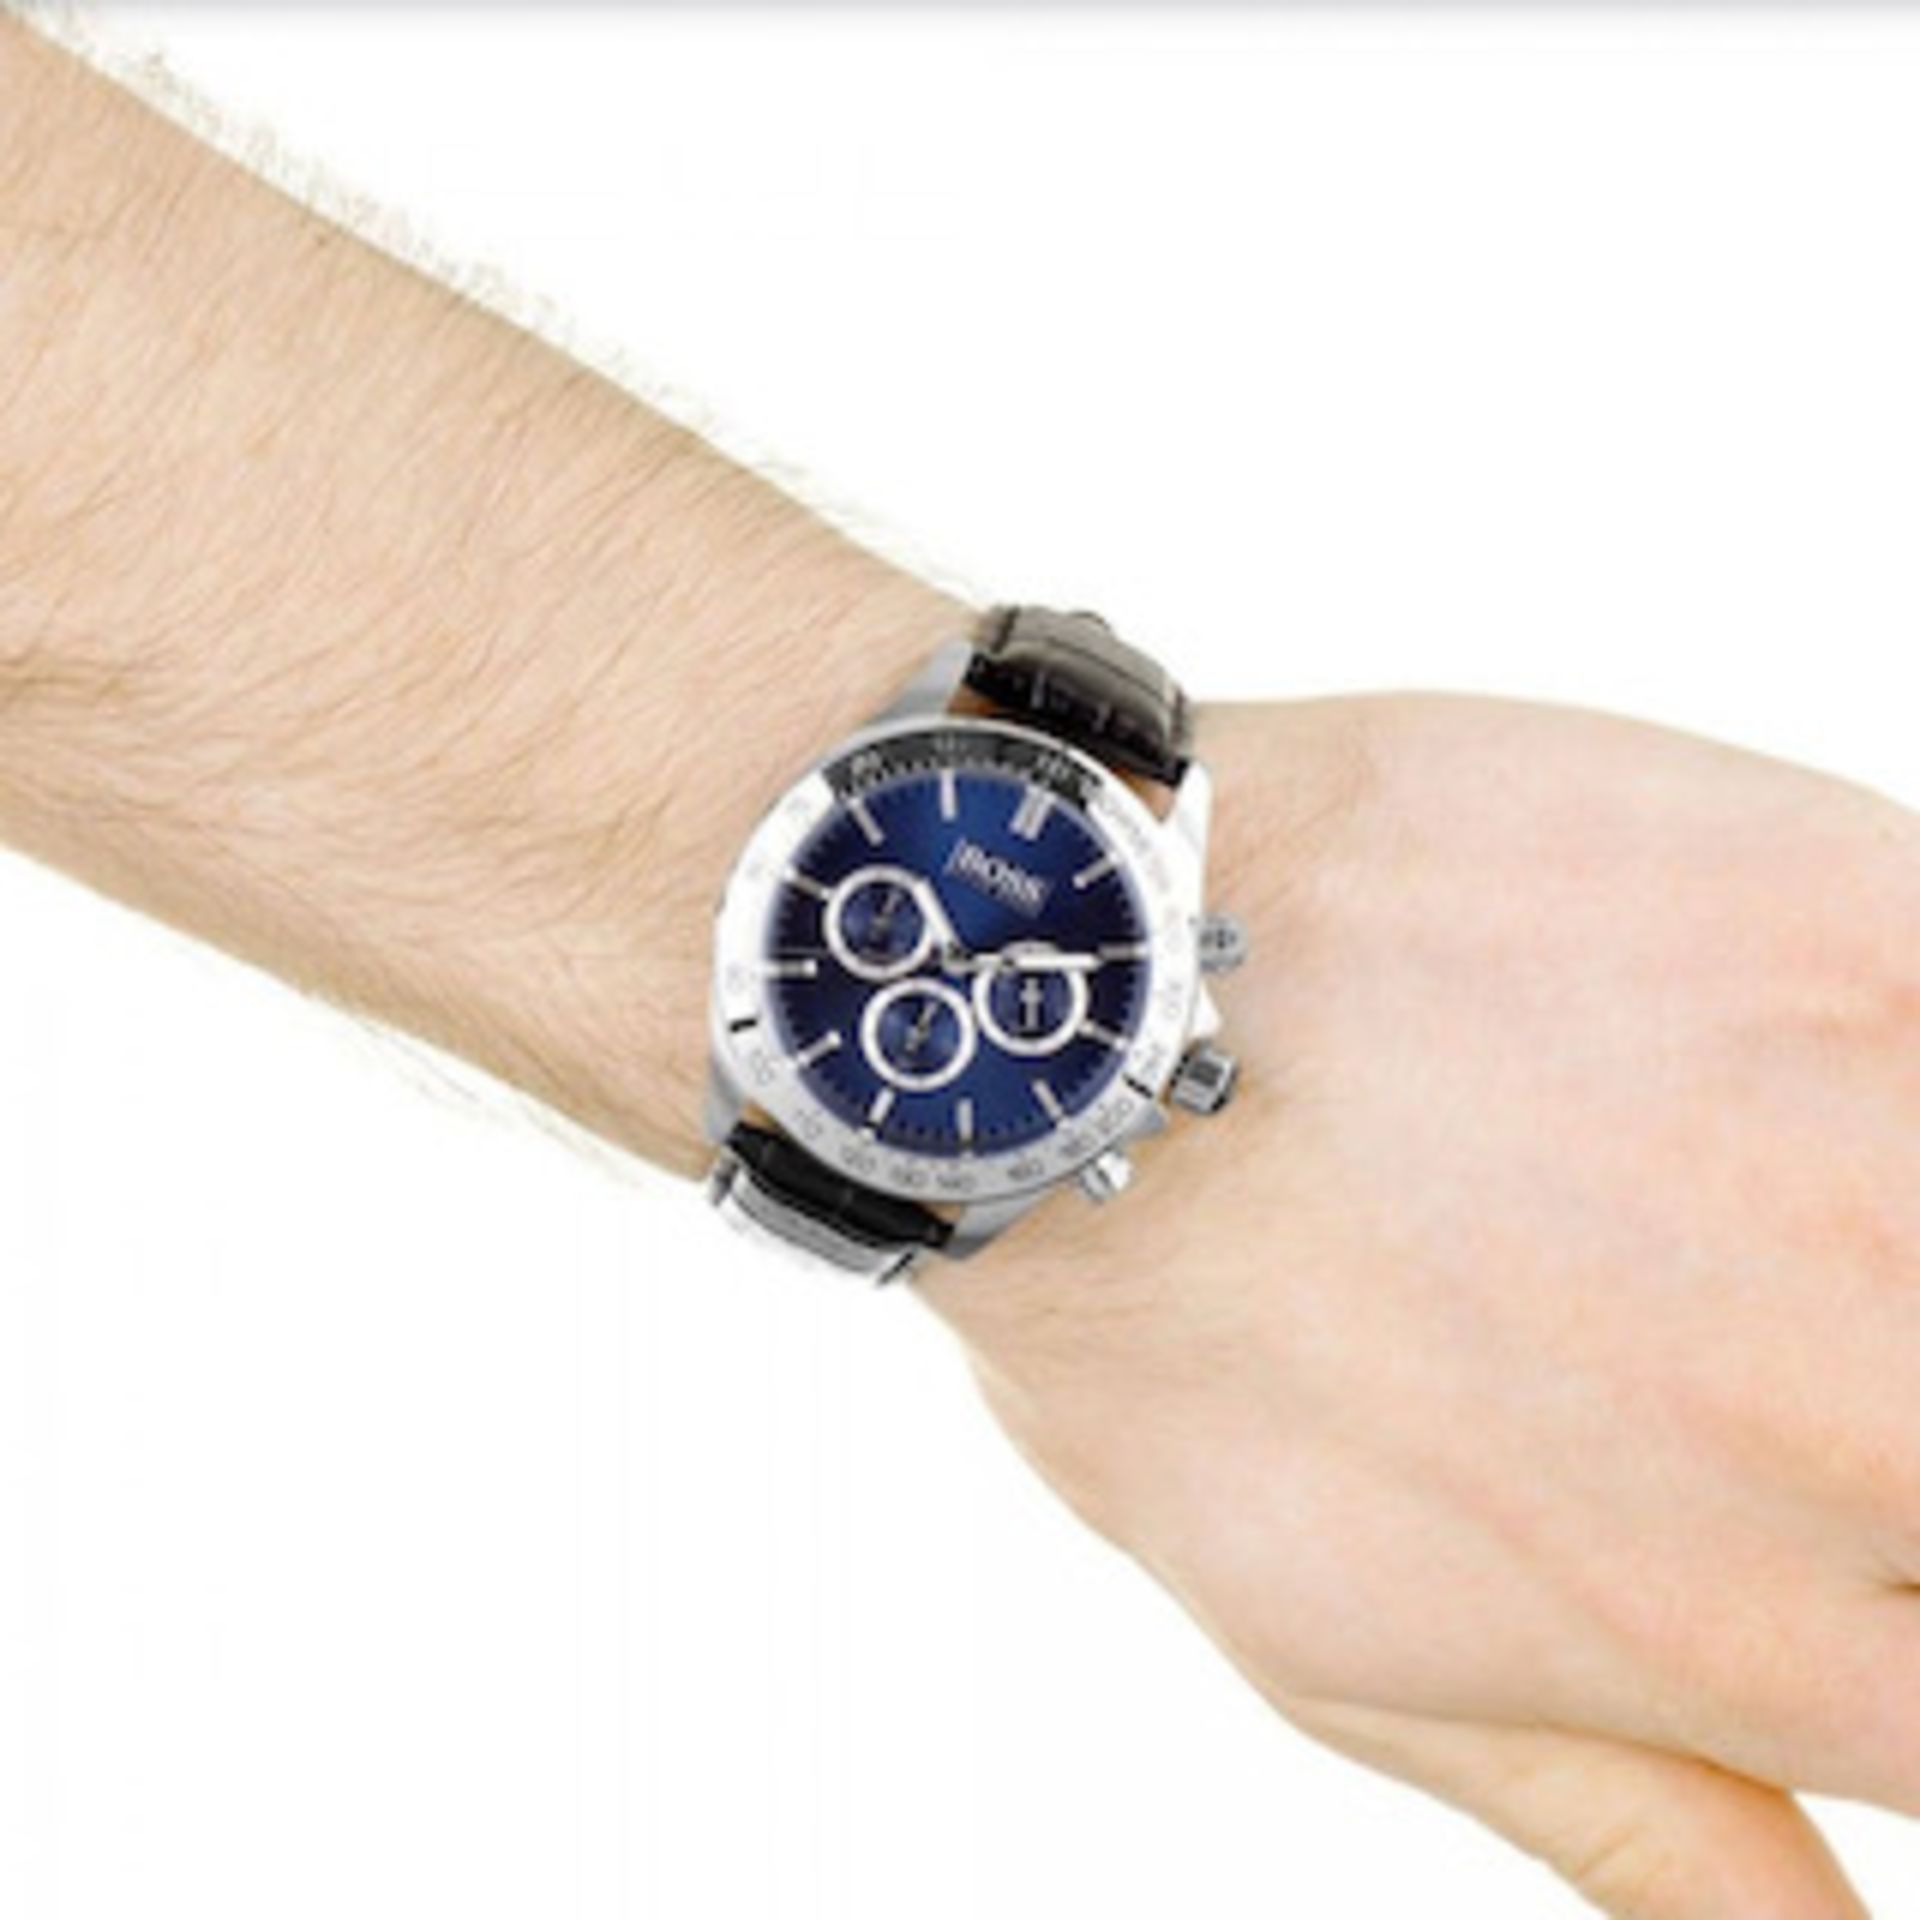 Hugo Boss 1513176 Men's Ikon Blue Dial Black Leather Strap Chronograph Watch - Image 6 of 6